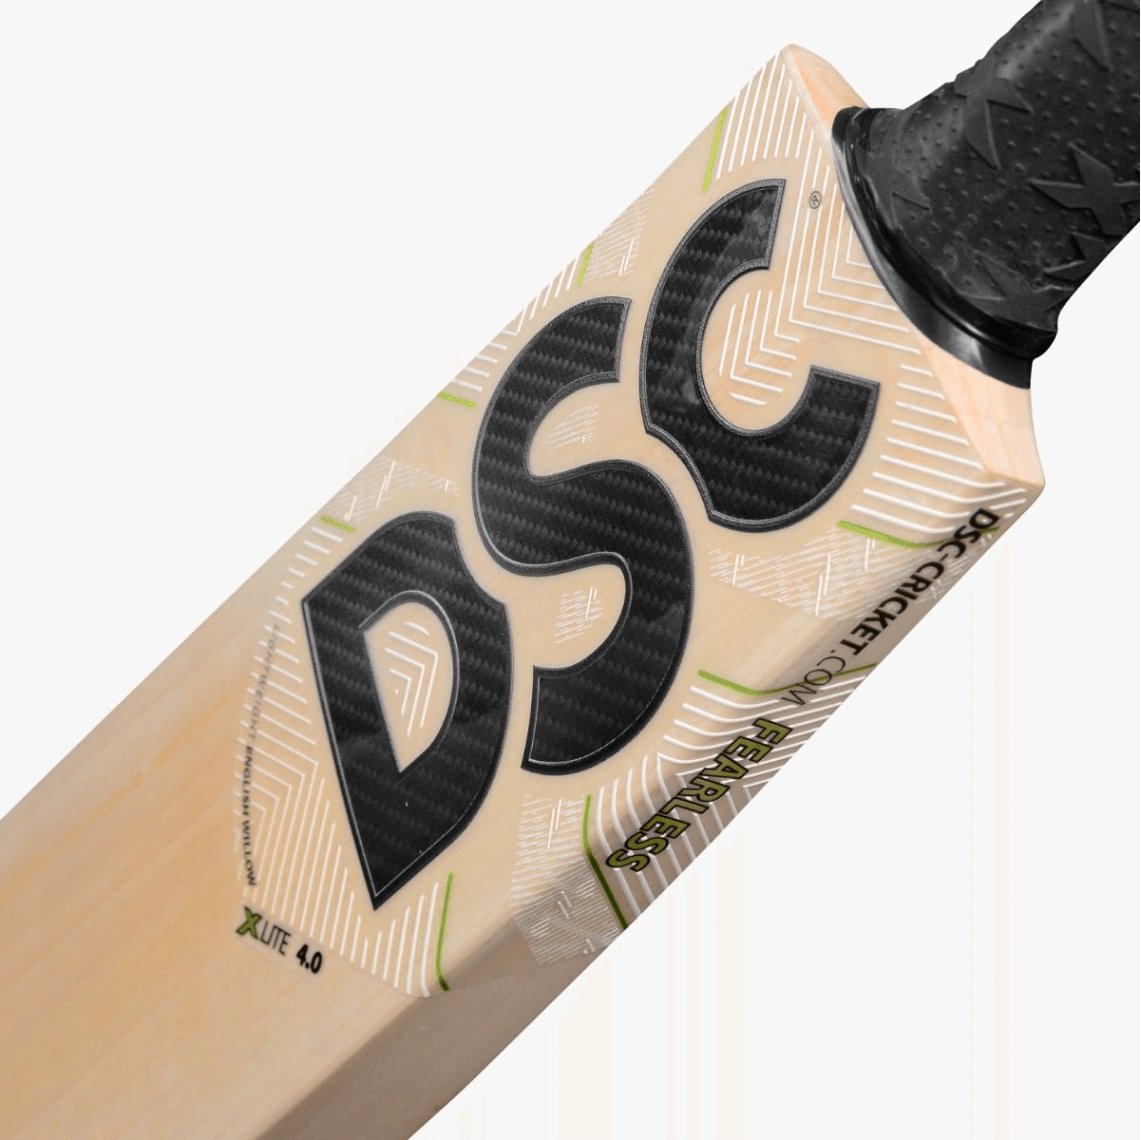 DSC Xlite 4.0 English Willow Cricket Bat